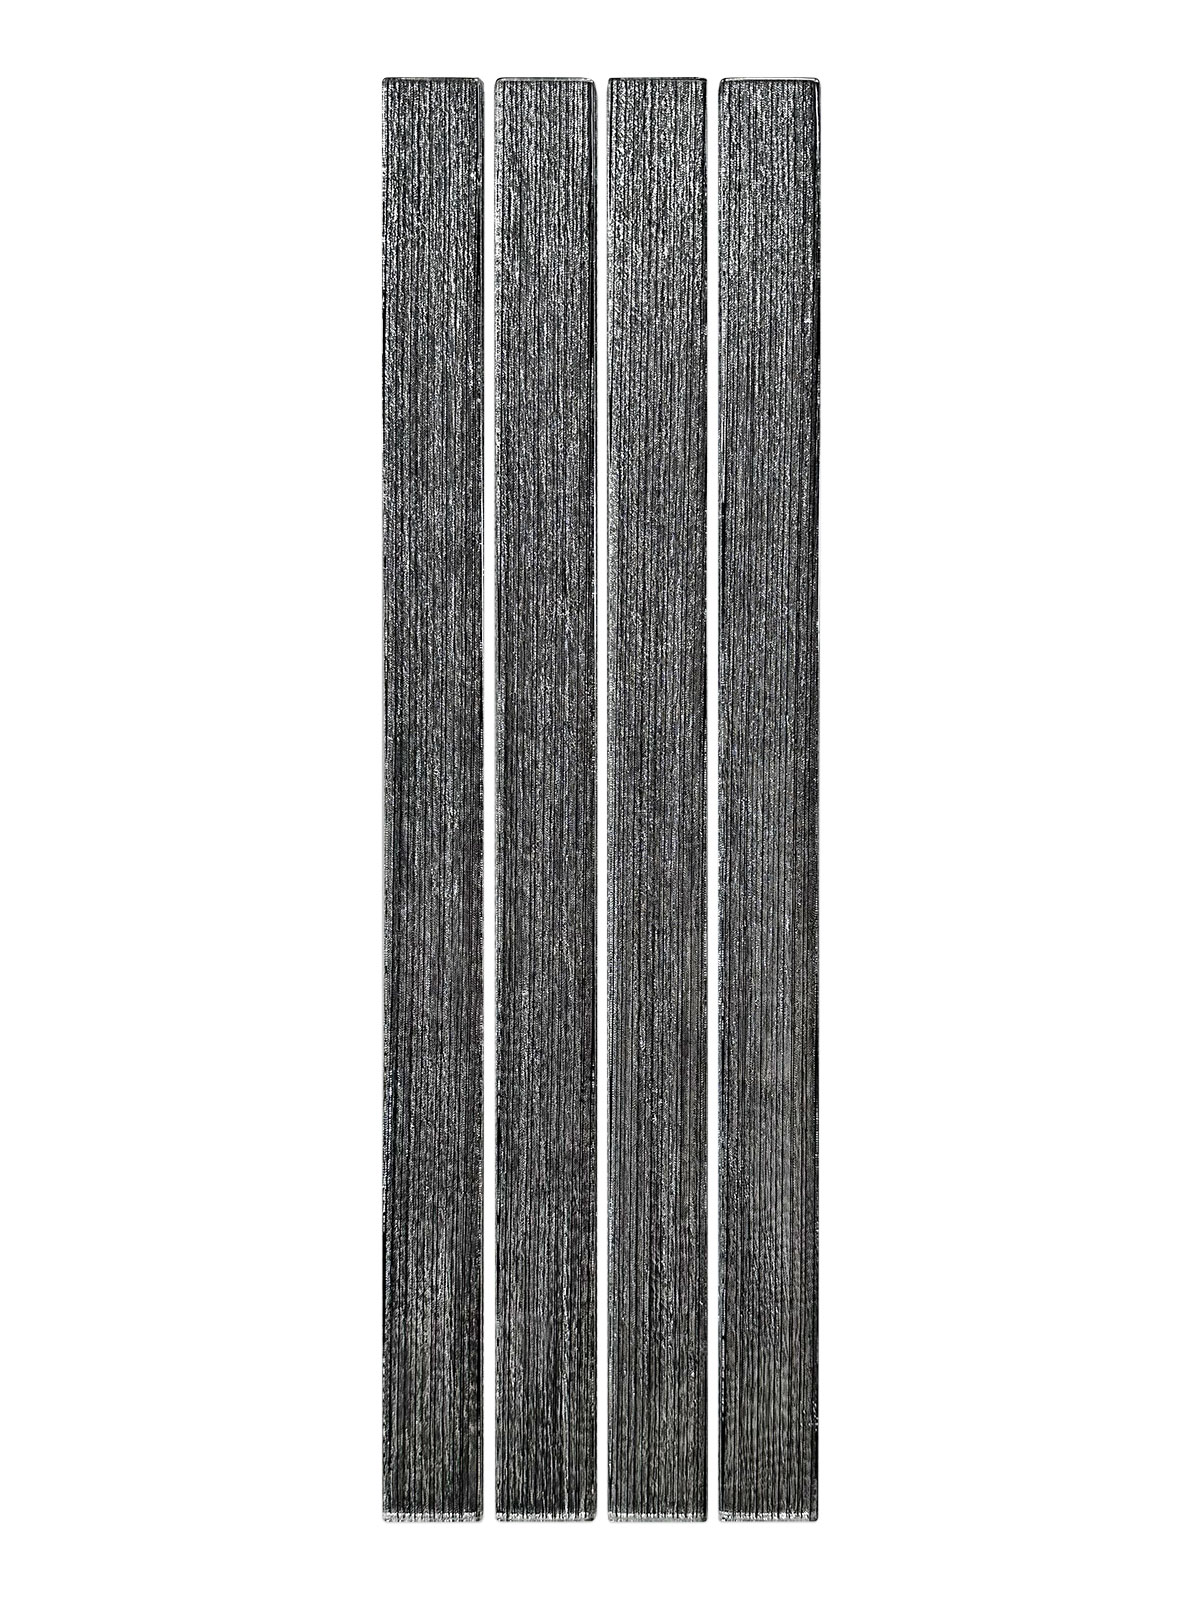 Shimmery Black Glass Modern Backsplash Tile BA8021 3